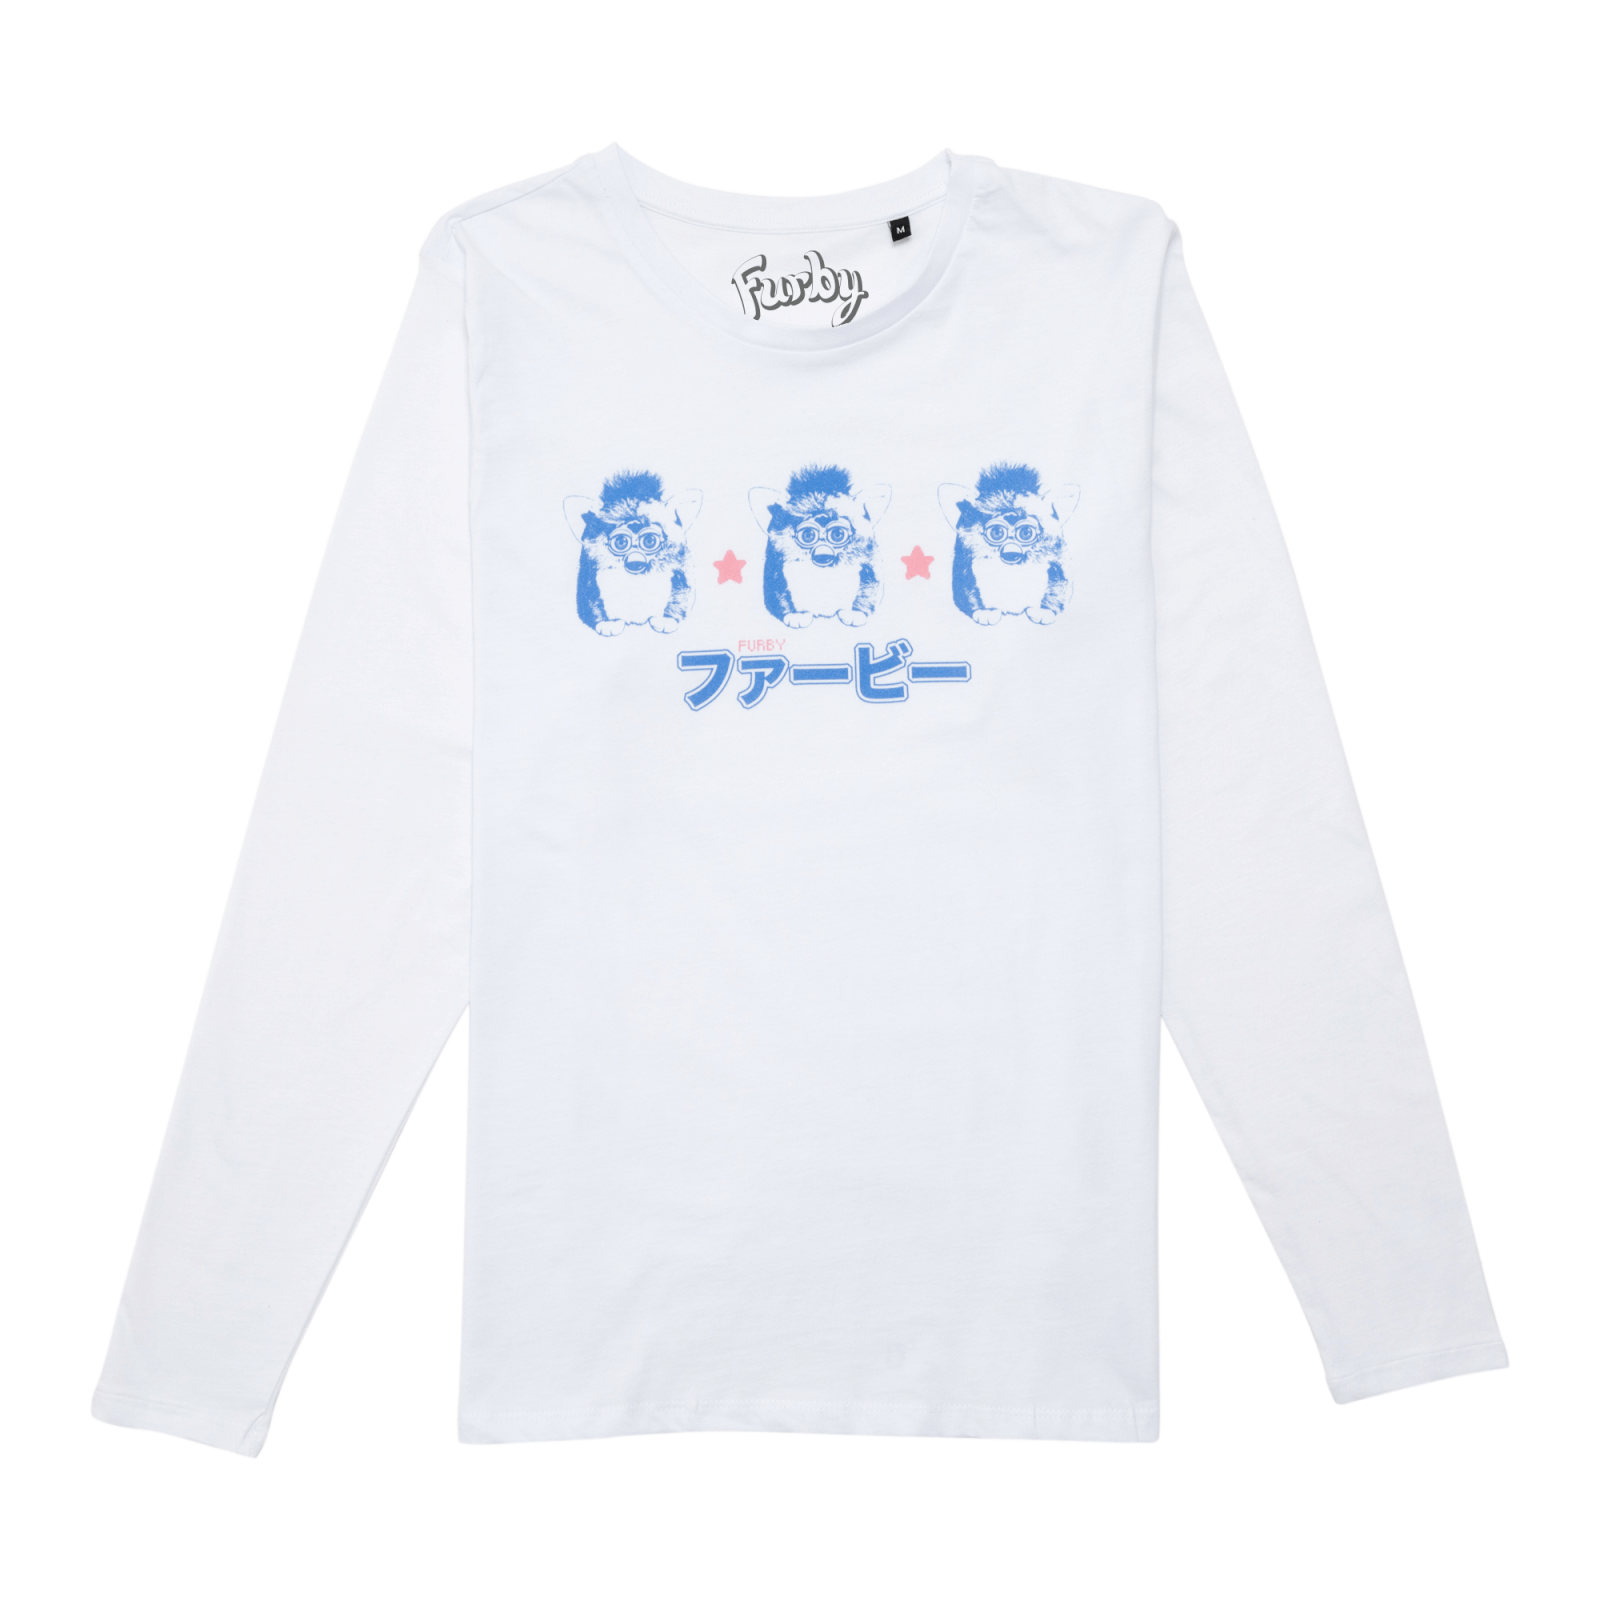 Furby Team Furby Unisex Long Sleeve T-Shirt - White - XS